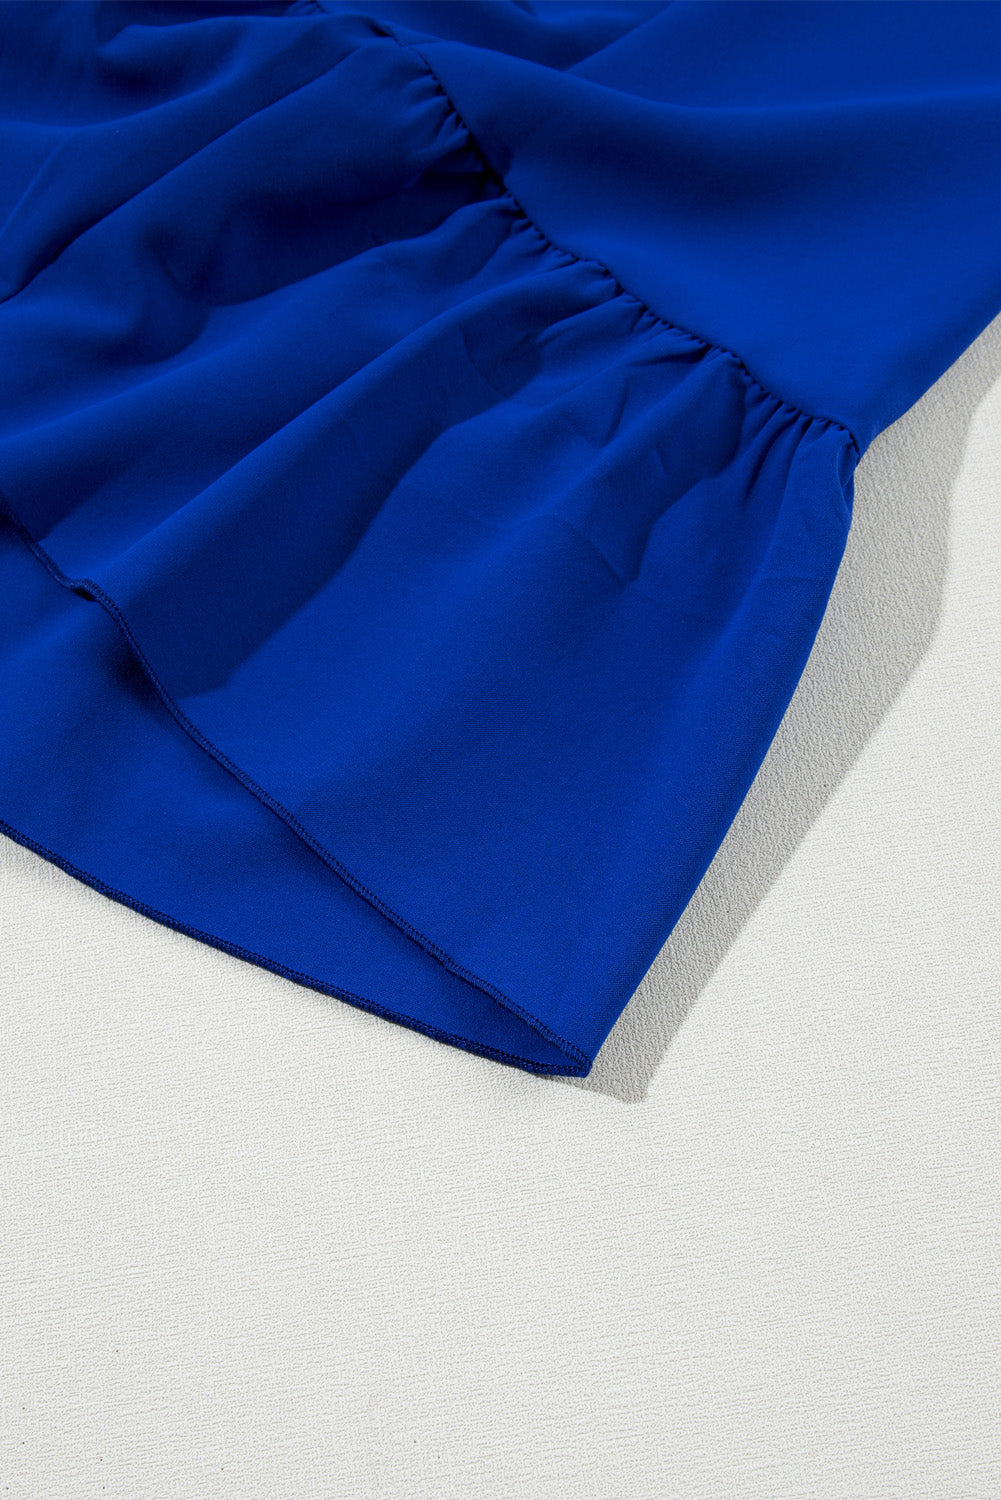 Dark Blue Shirred Ruffled Square Neck Plus Size Mini Dress